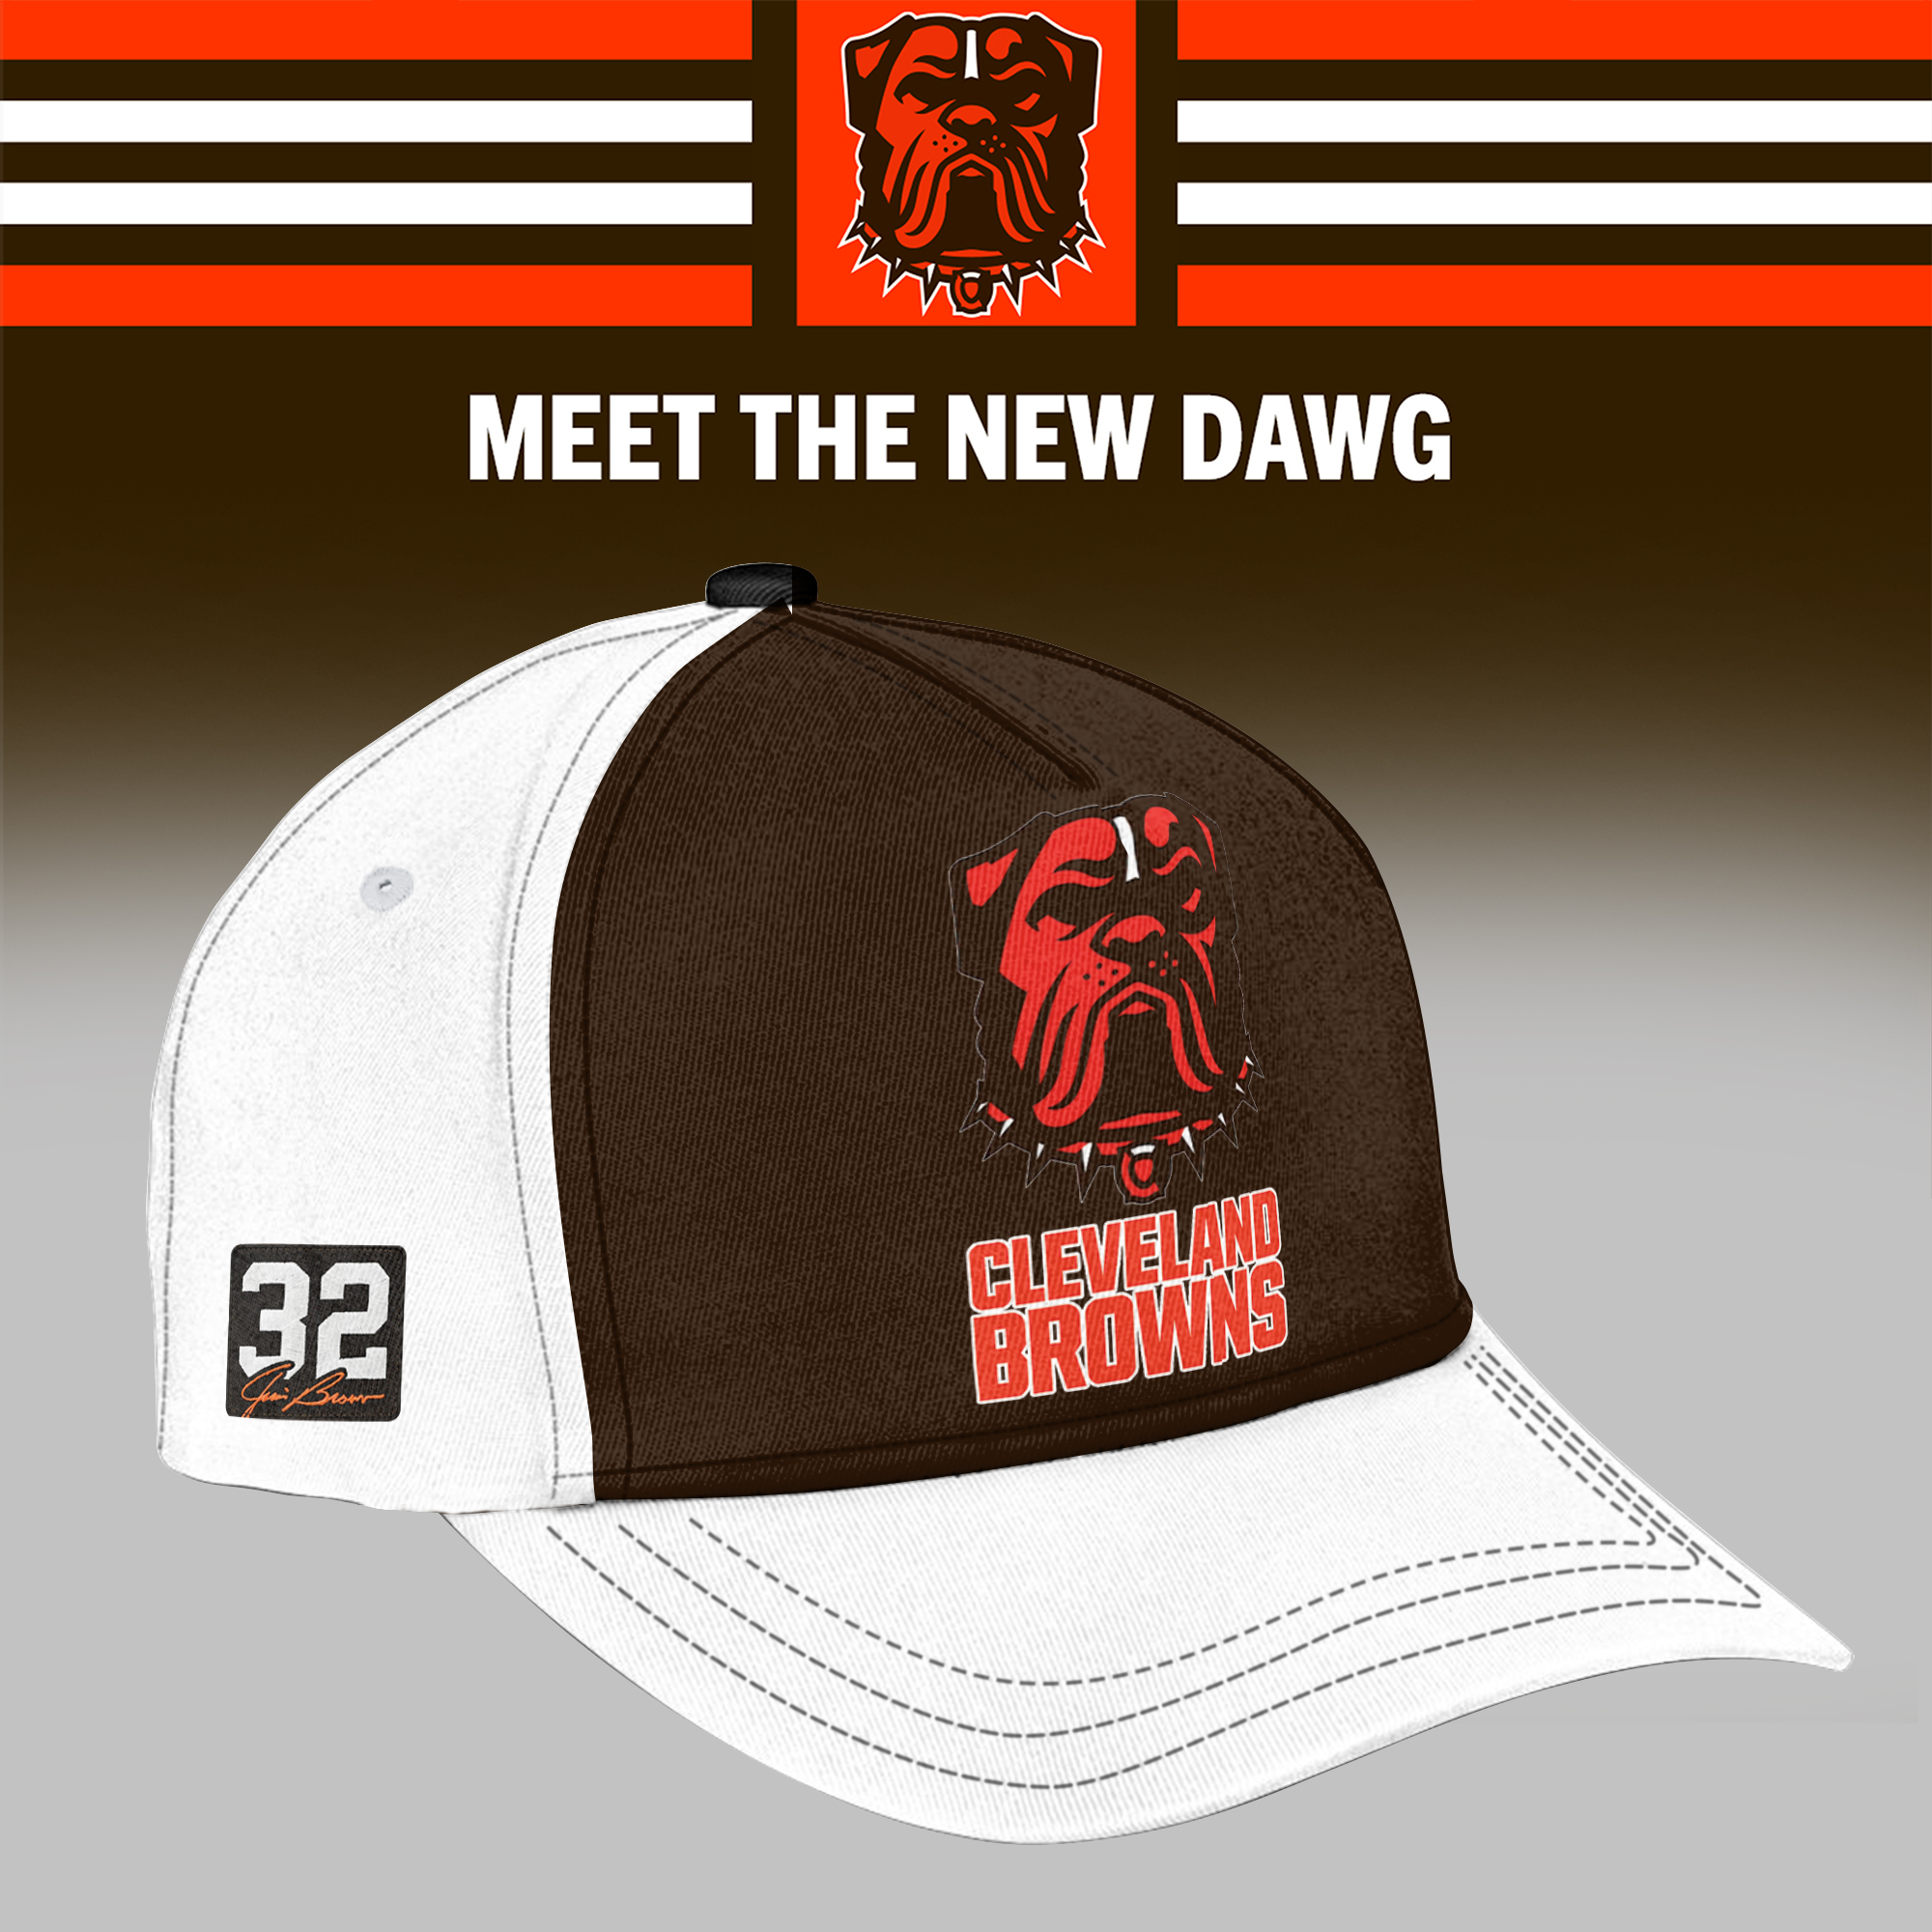  Cleveland Browns Dog Dawg Pound 11 x 8.5 Custom